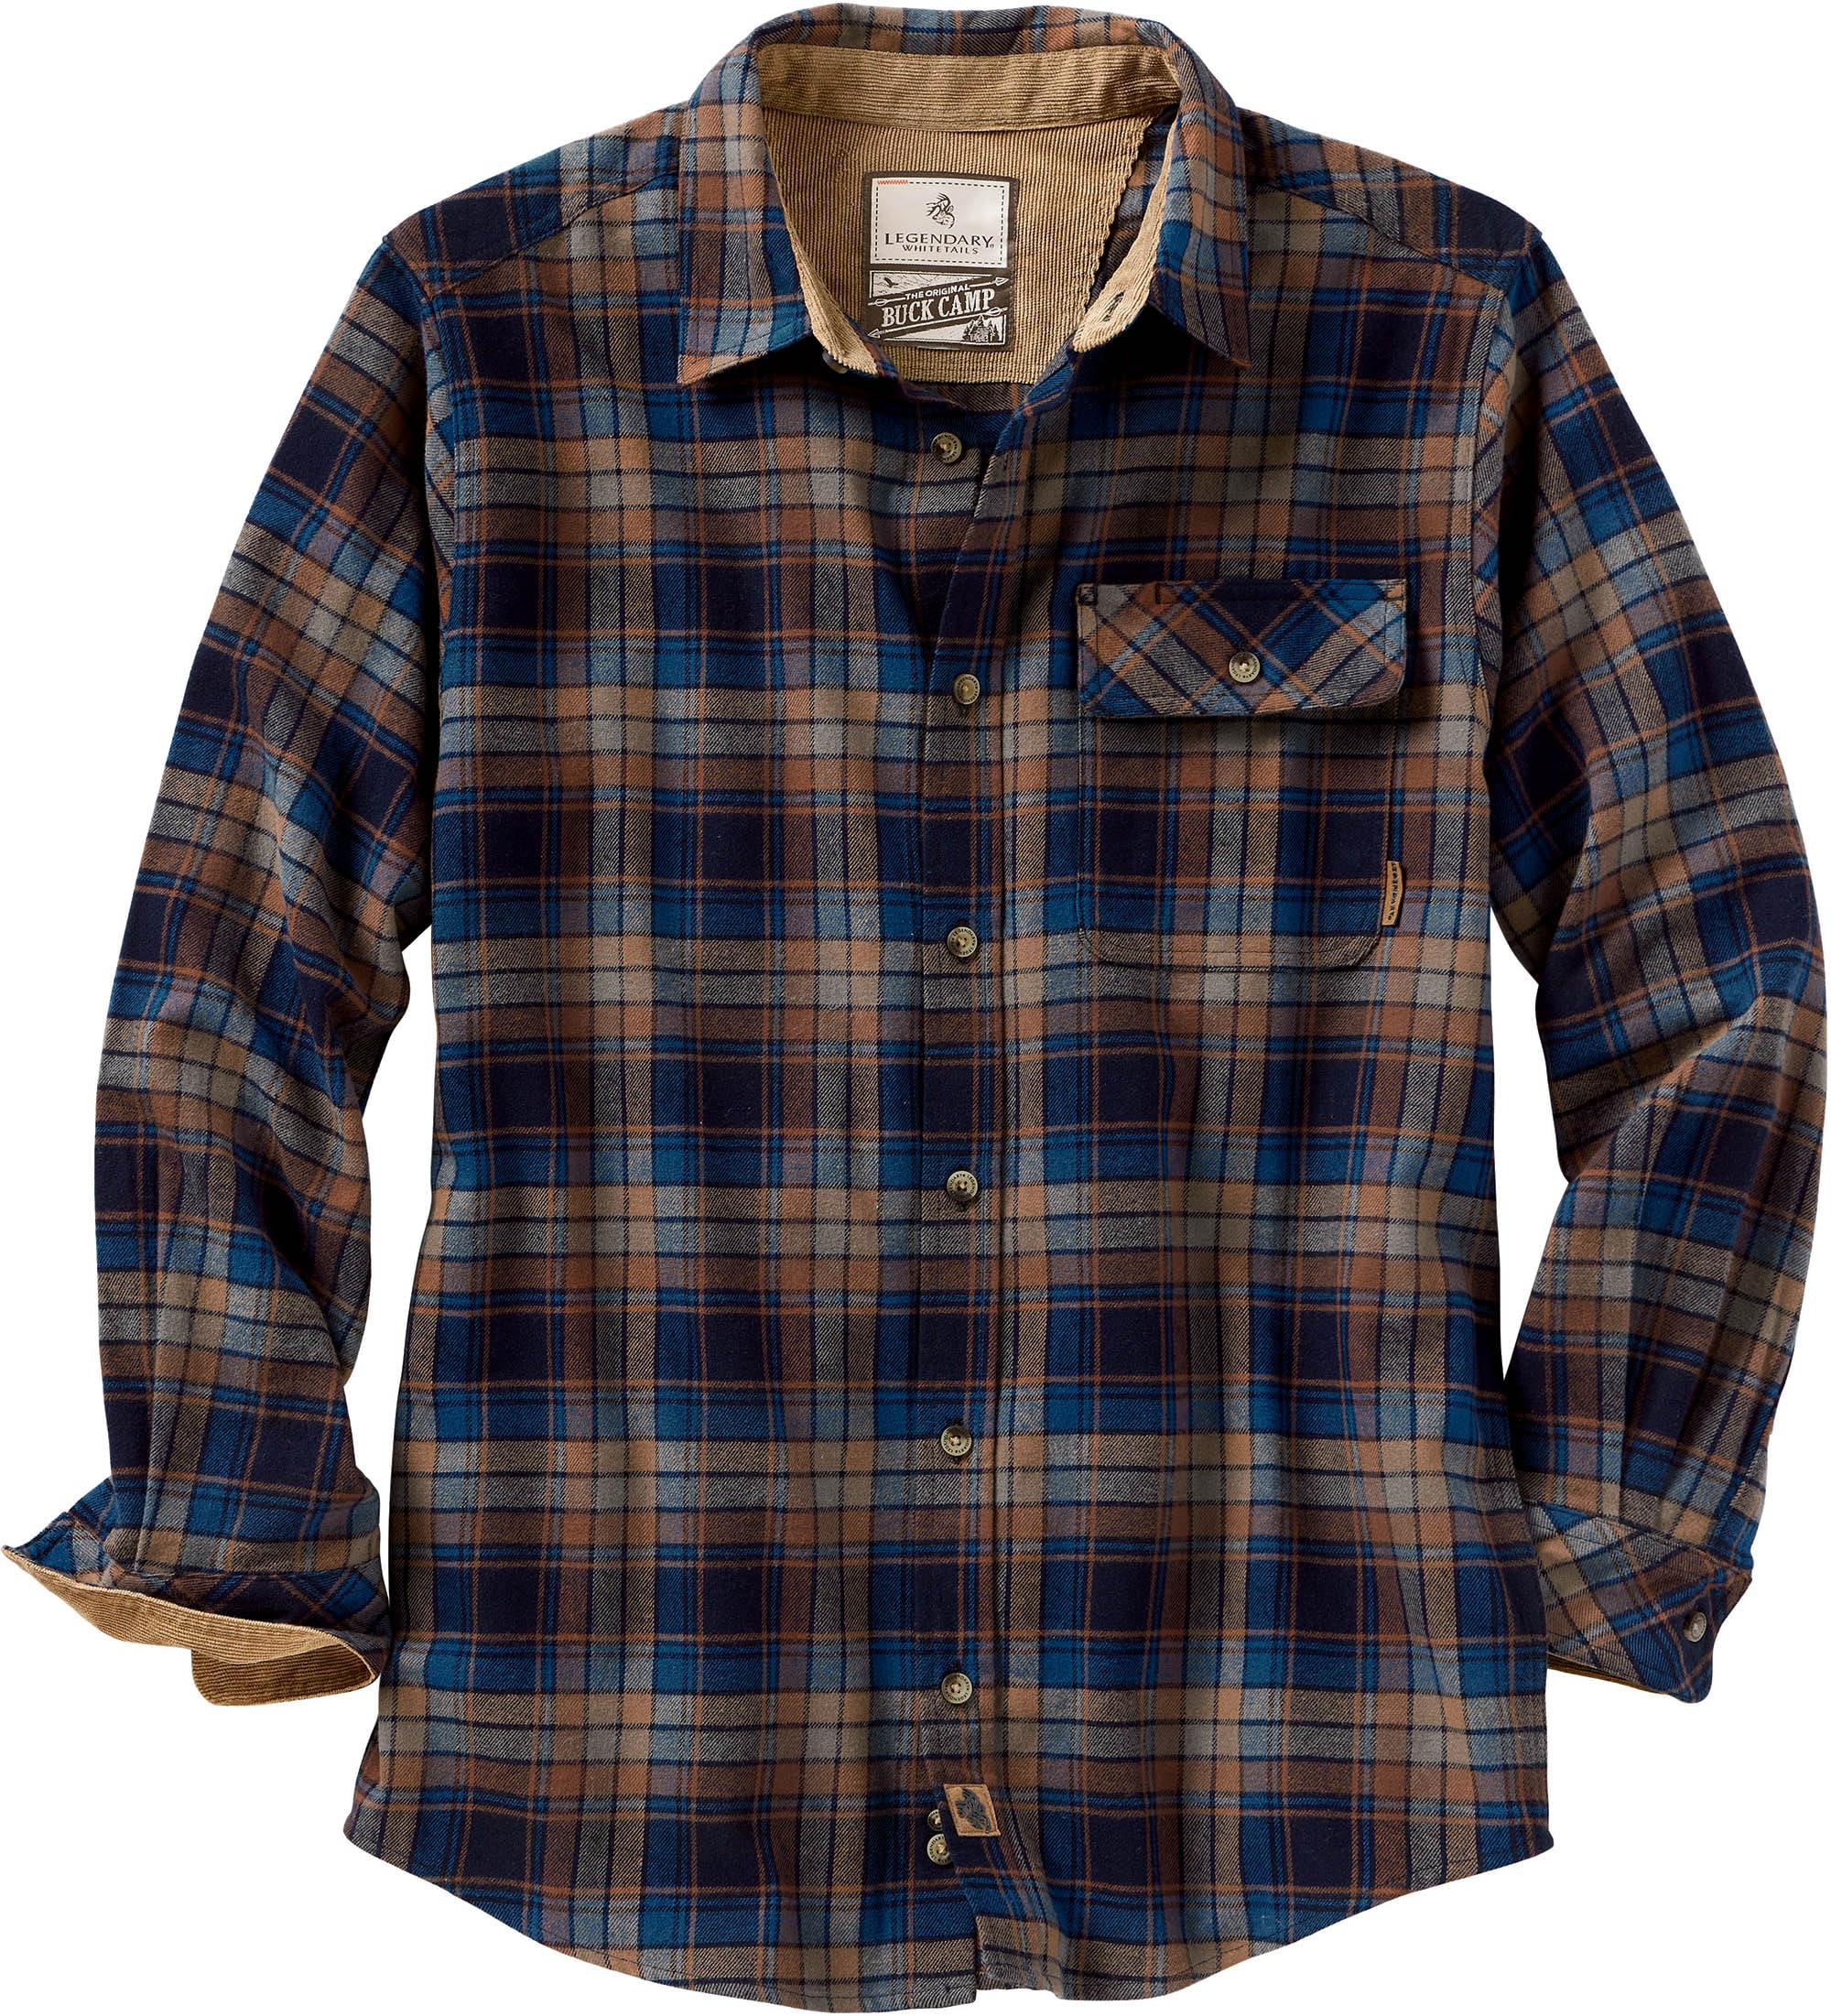 Legendary Whitetails Men's Buck Camp Flannel Plaid Shirt